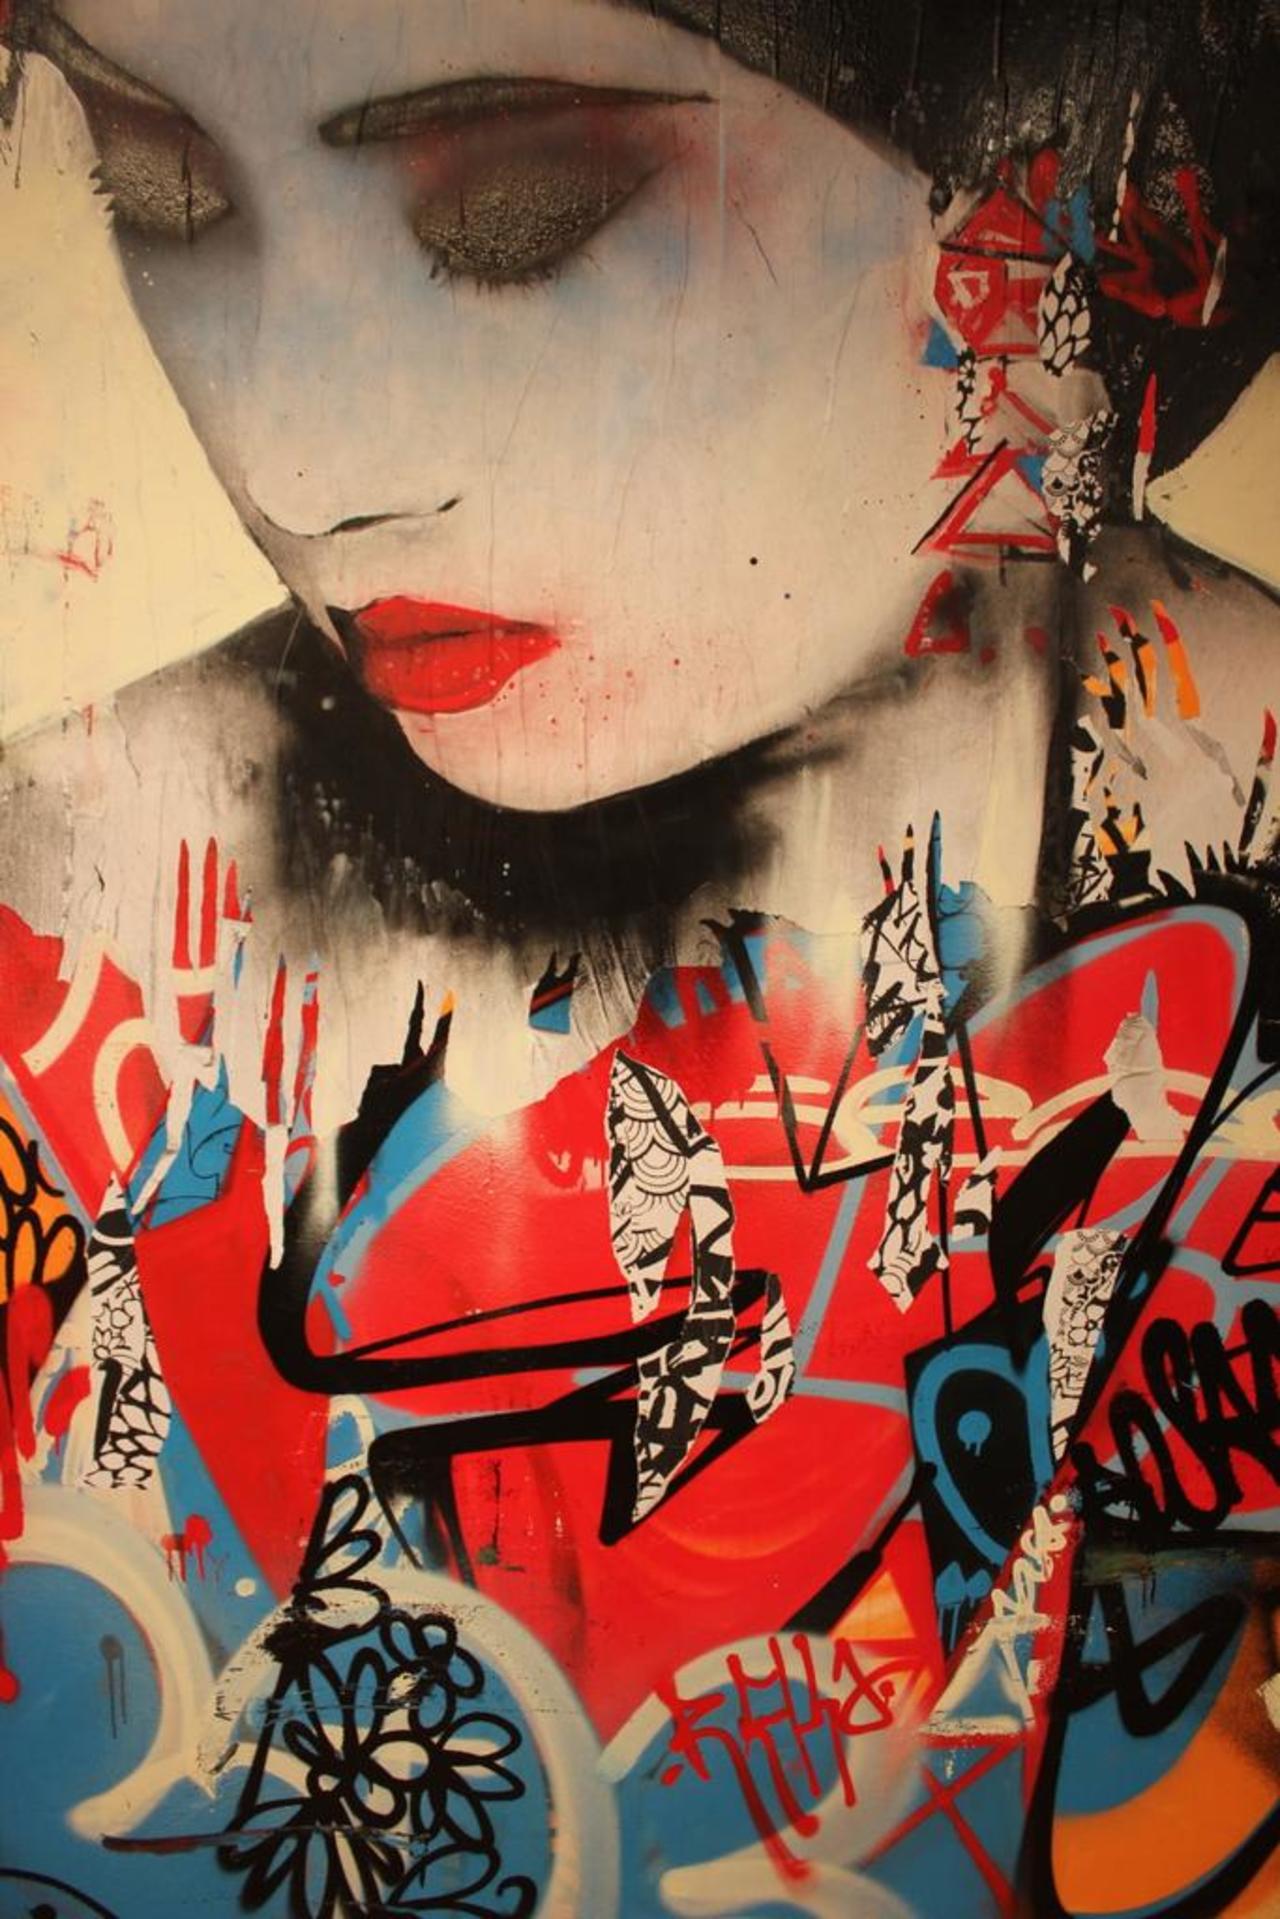 Geisha (detail) by HUSH hushart 'Sirens'  in Metro Gallery, Melbourne #art #graffiti" http://t.co/zECgMB3UN7 | RT beatrixten Like art ? F…